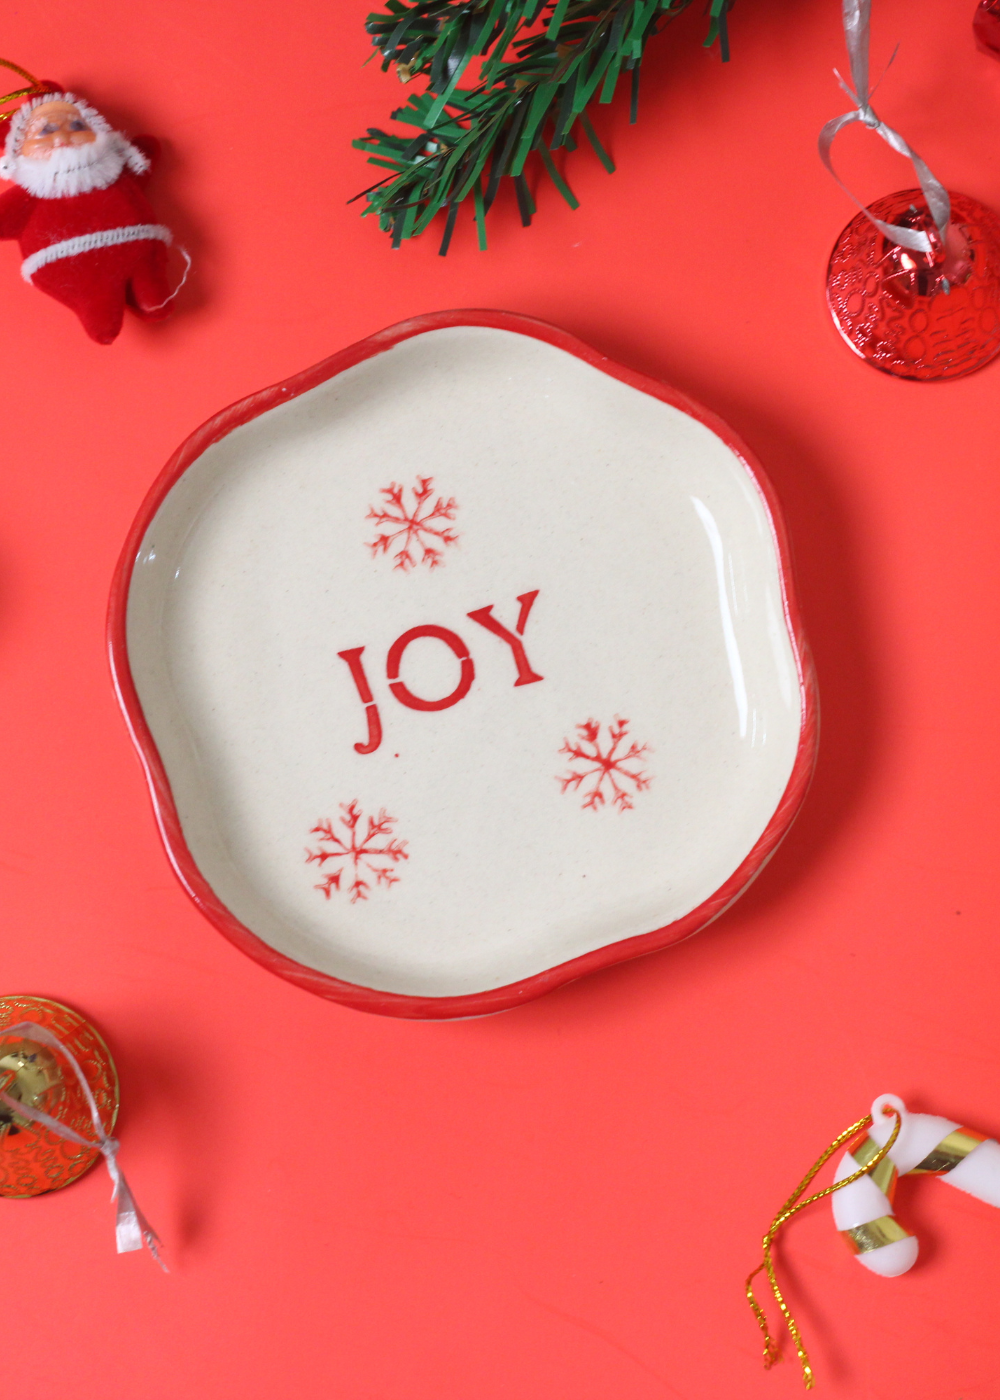 joy handmade dessert plate for special christmas day